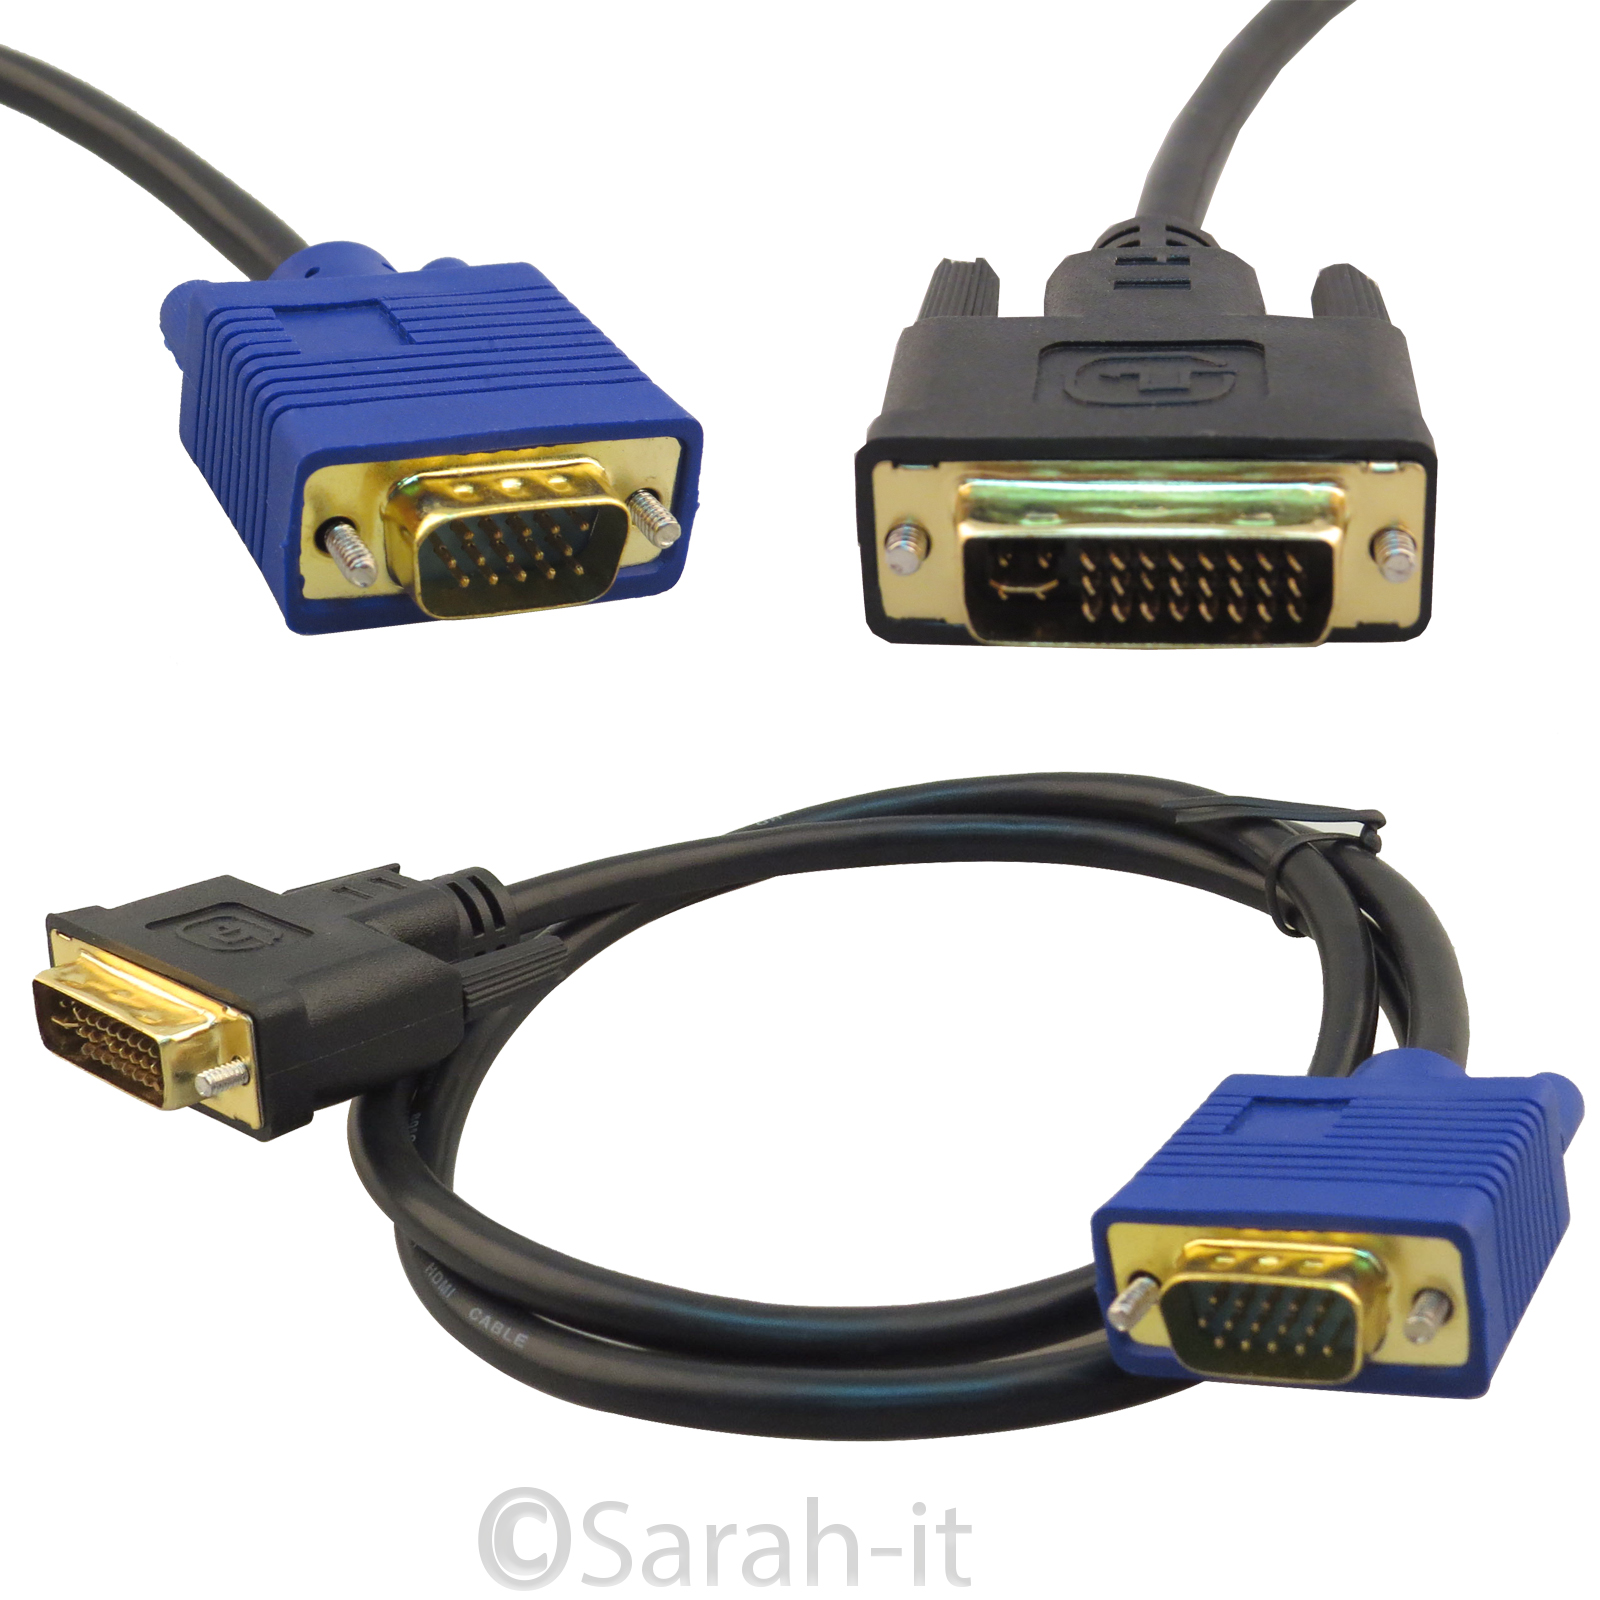 VGA s VGA DVI D HDMI HD TV Monitor Cable Lead 0 5M 1M 2M 3M 5M 7M 10M 15M 20 30M